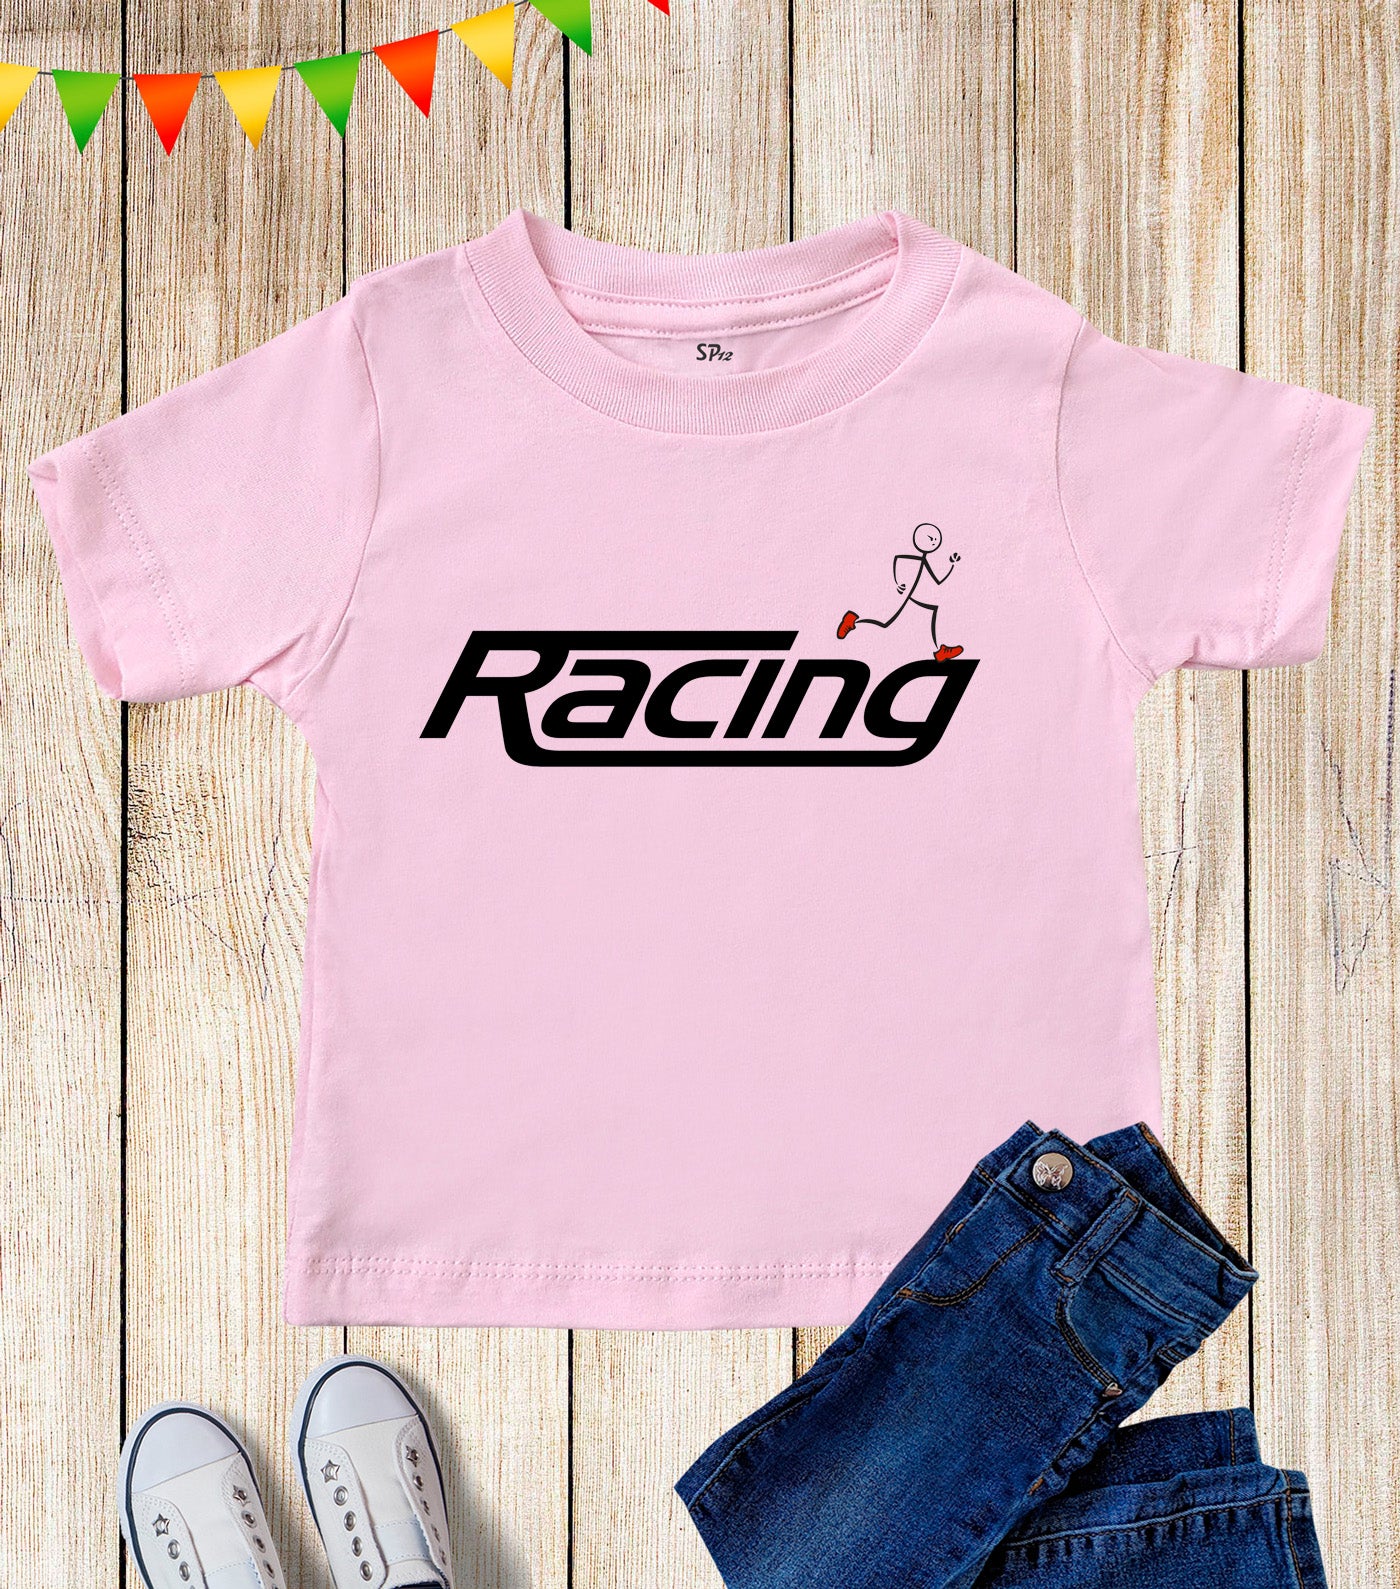 Racing Sports Day Kids T Shirt